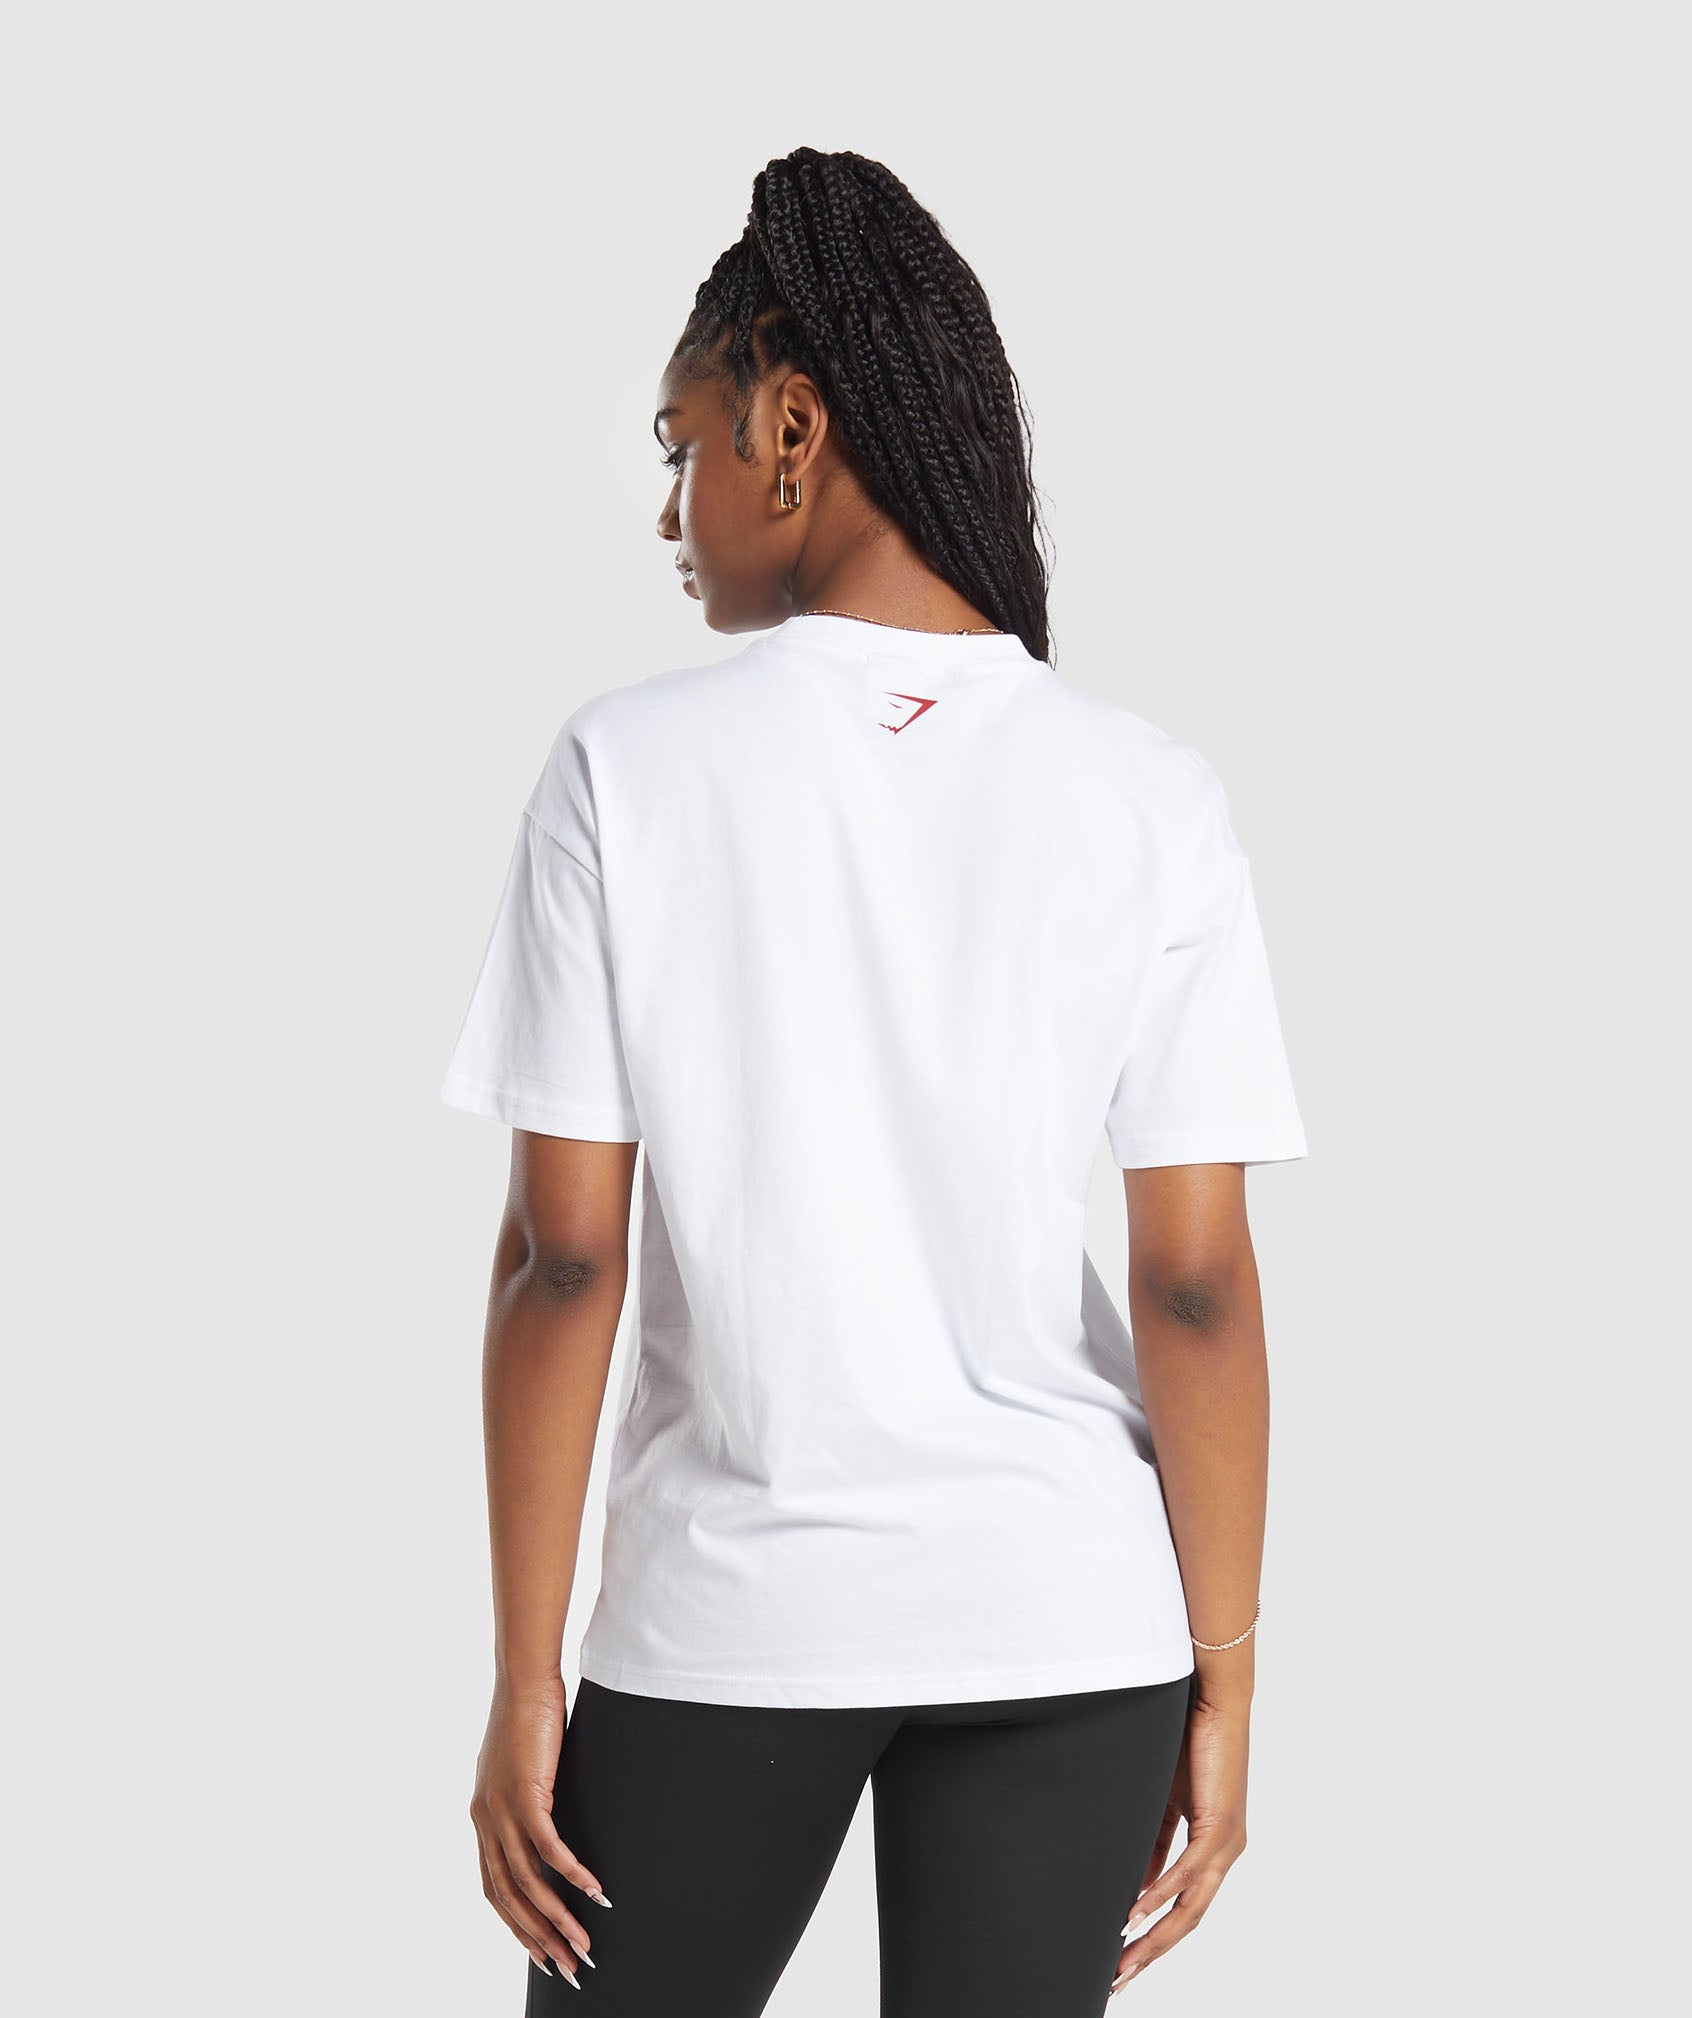 Barbell Cherries Oversized T-Shirt in White - view 2